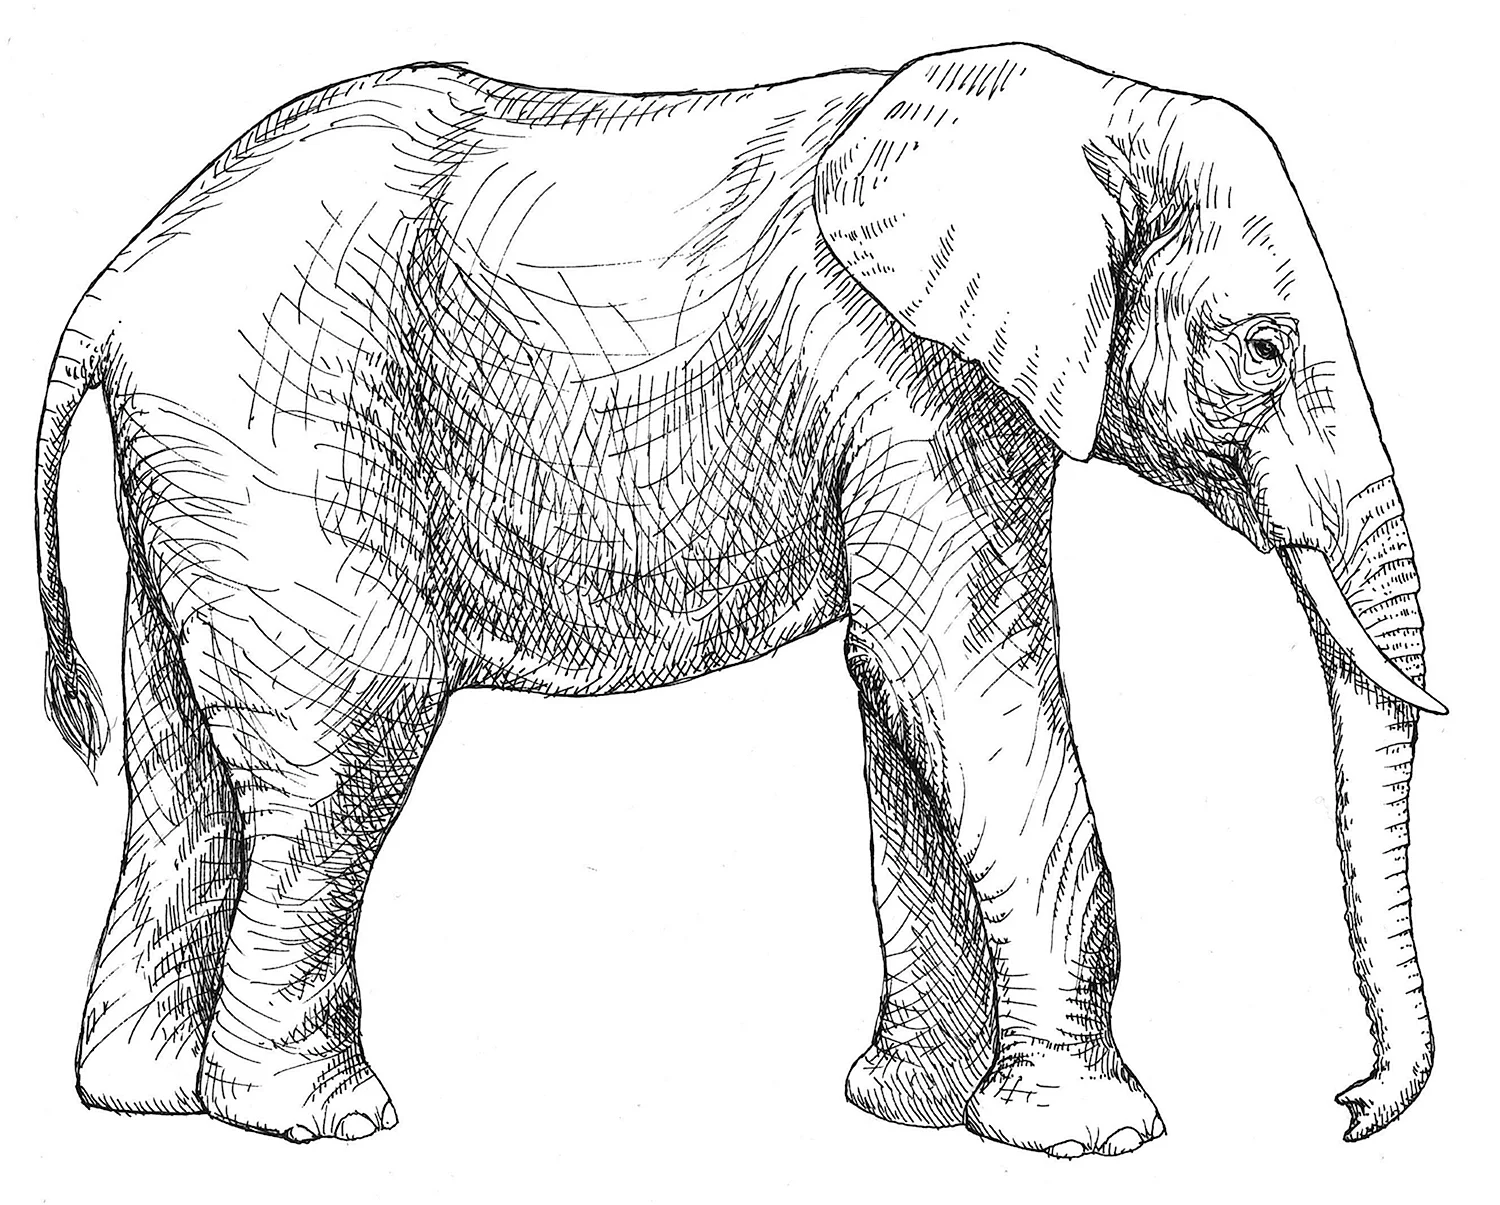 Слон вид сбоку и спереди